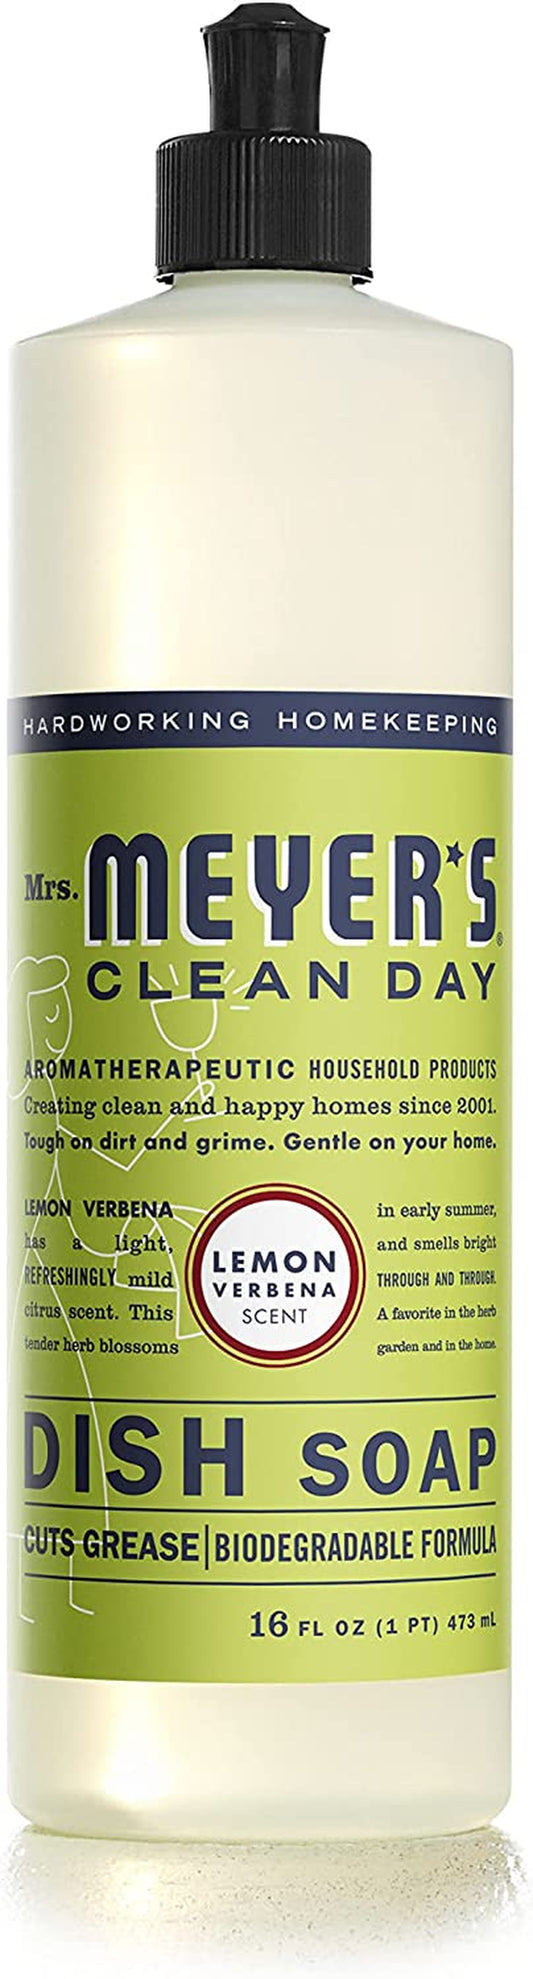 Mrs. Meyer'S Liquid Dish Soap, Biodegradable Formula, Lemon Verbena, 16 Fl. Oz